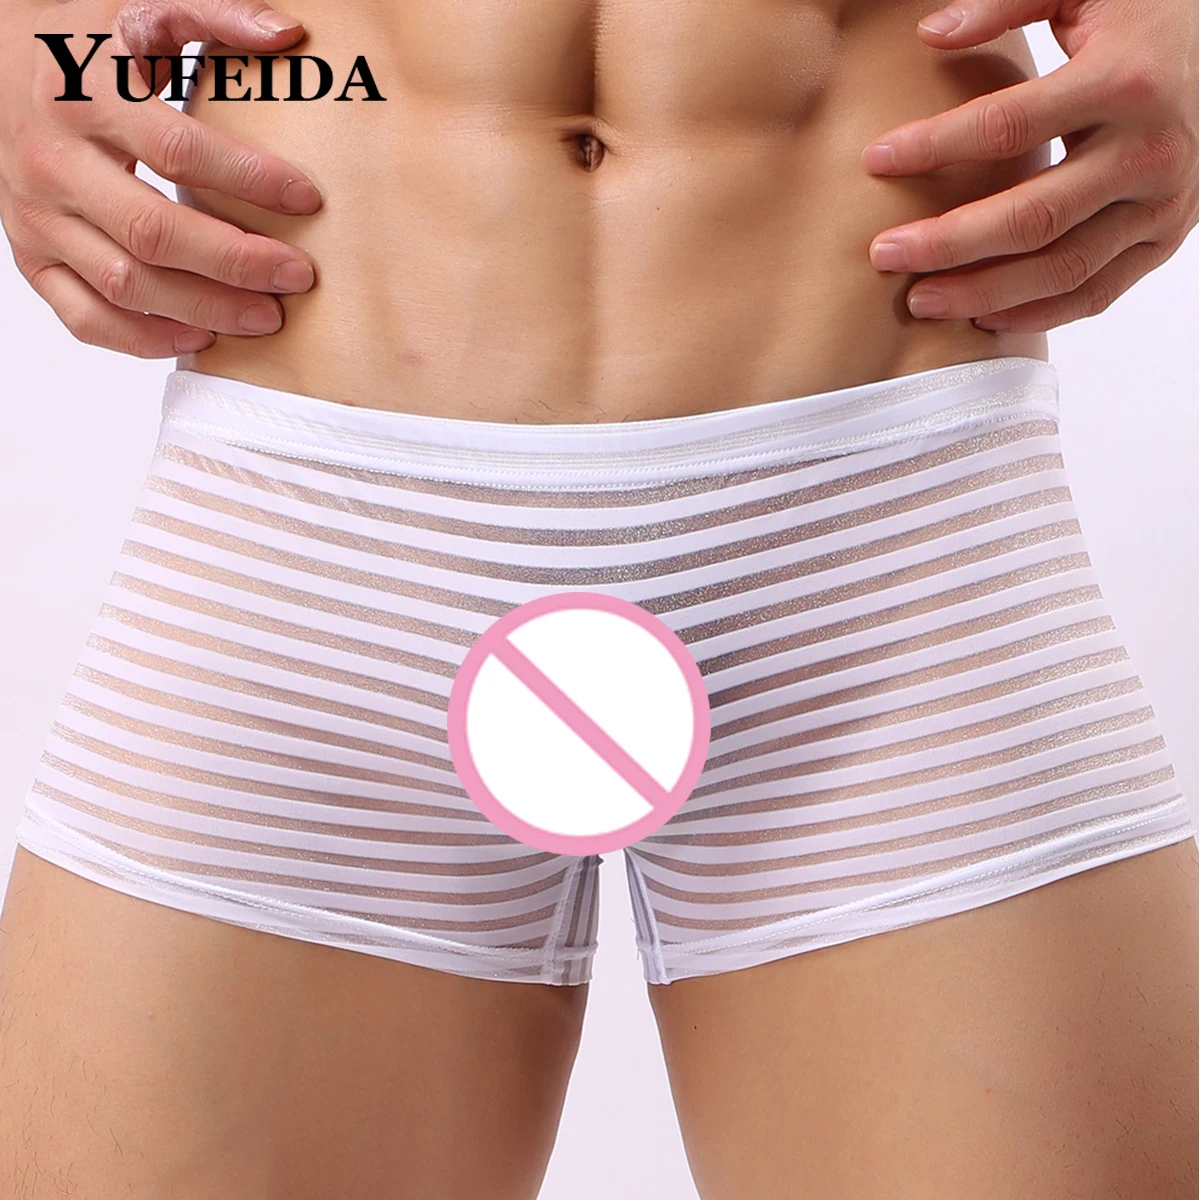 

YUFEIDA 1/7pcs Men Sexy Panties Mesh Stripe Perspective Boxers Low Waist Thin Breathable Male Boxer Shorts Transparent Underpant